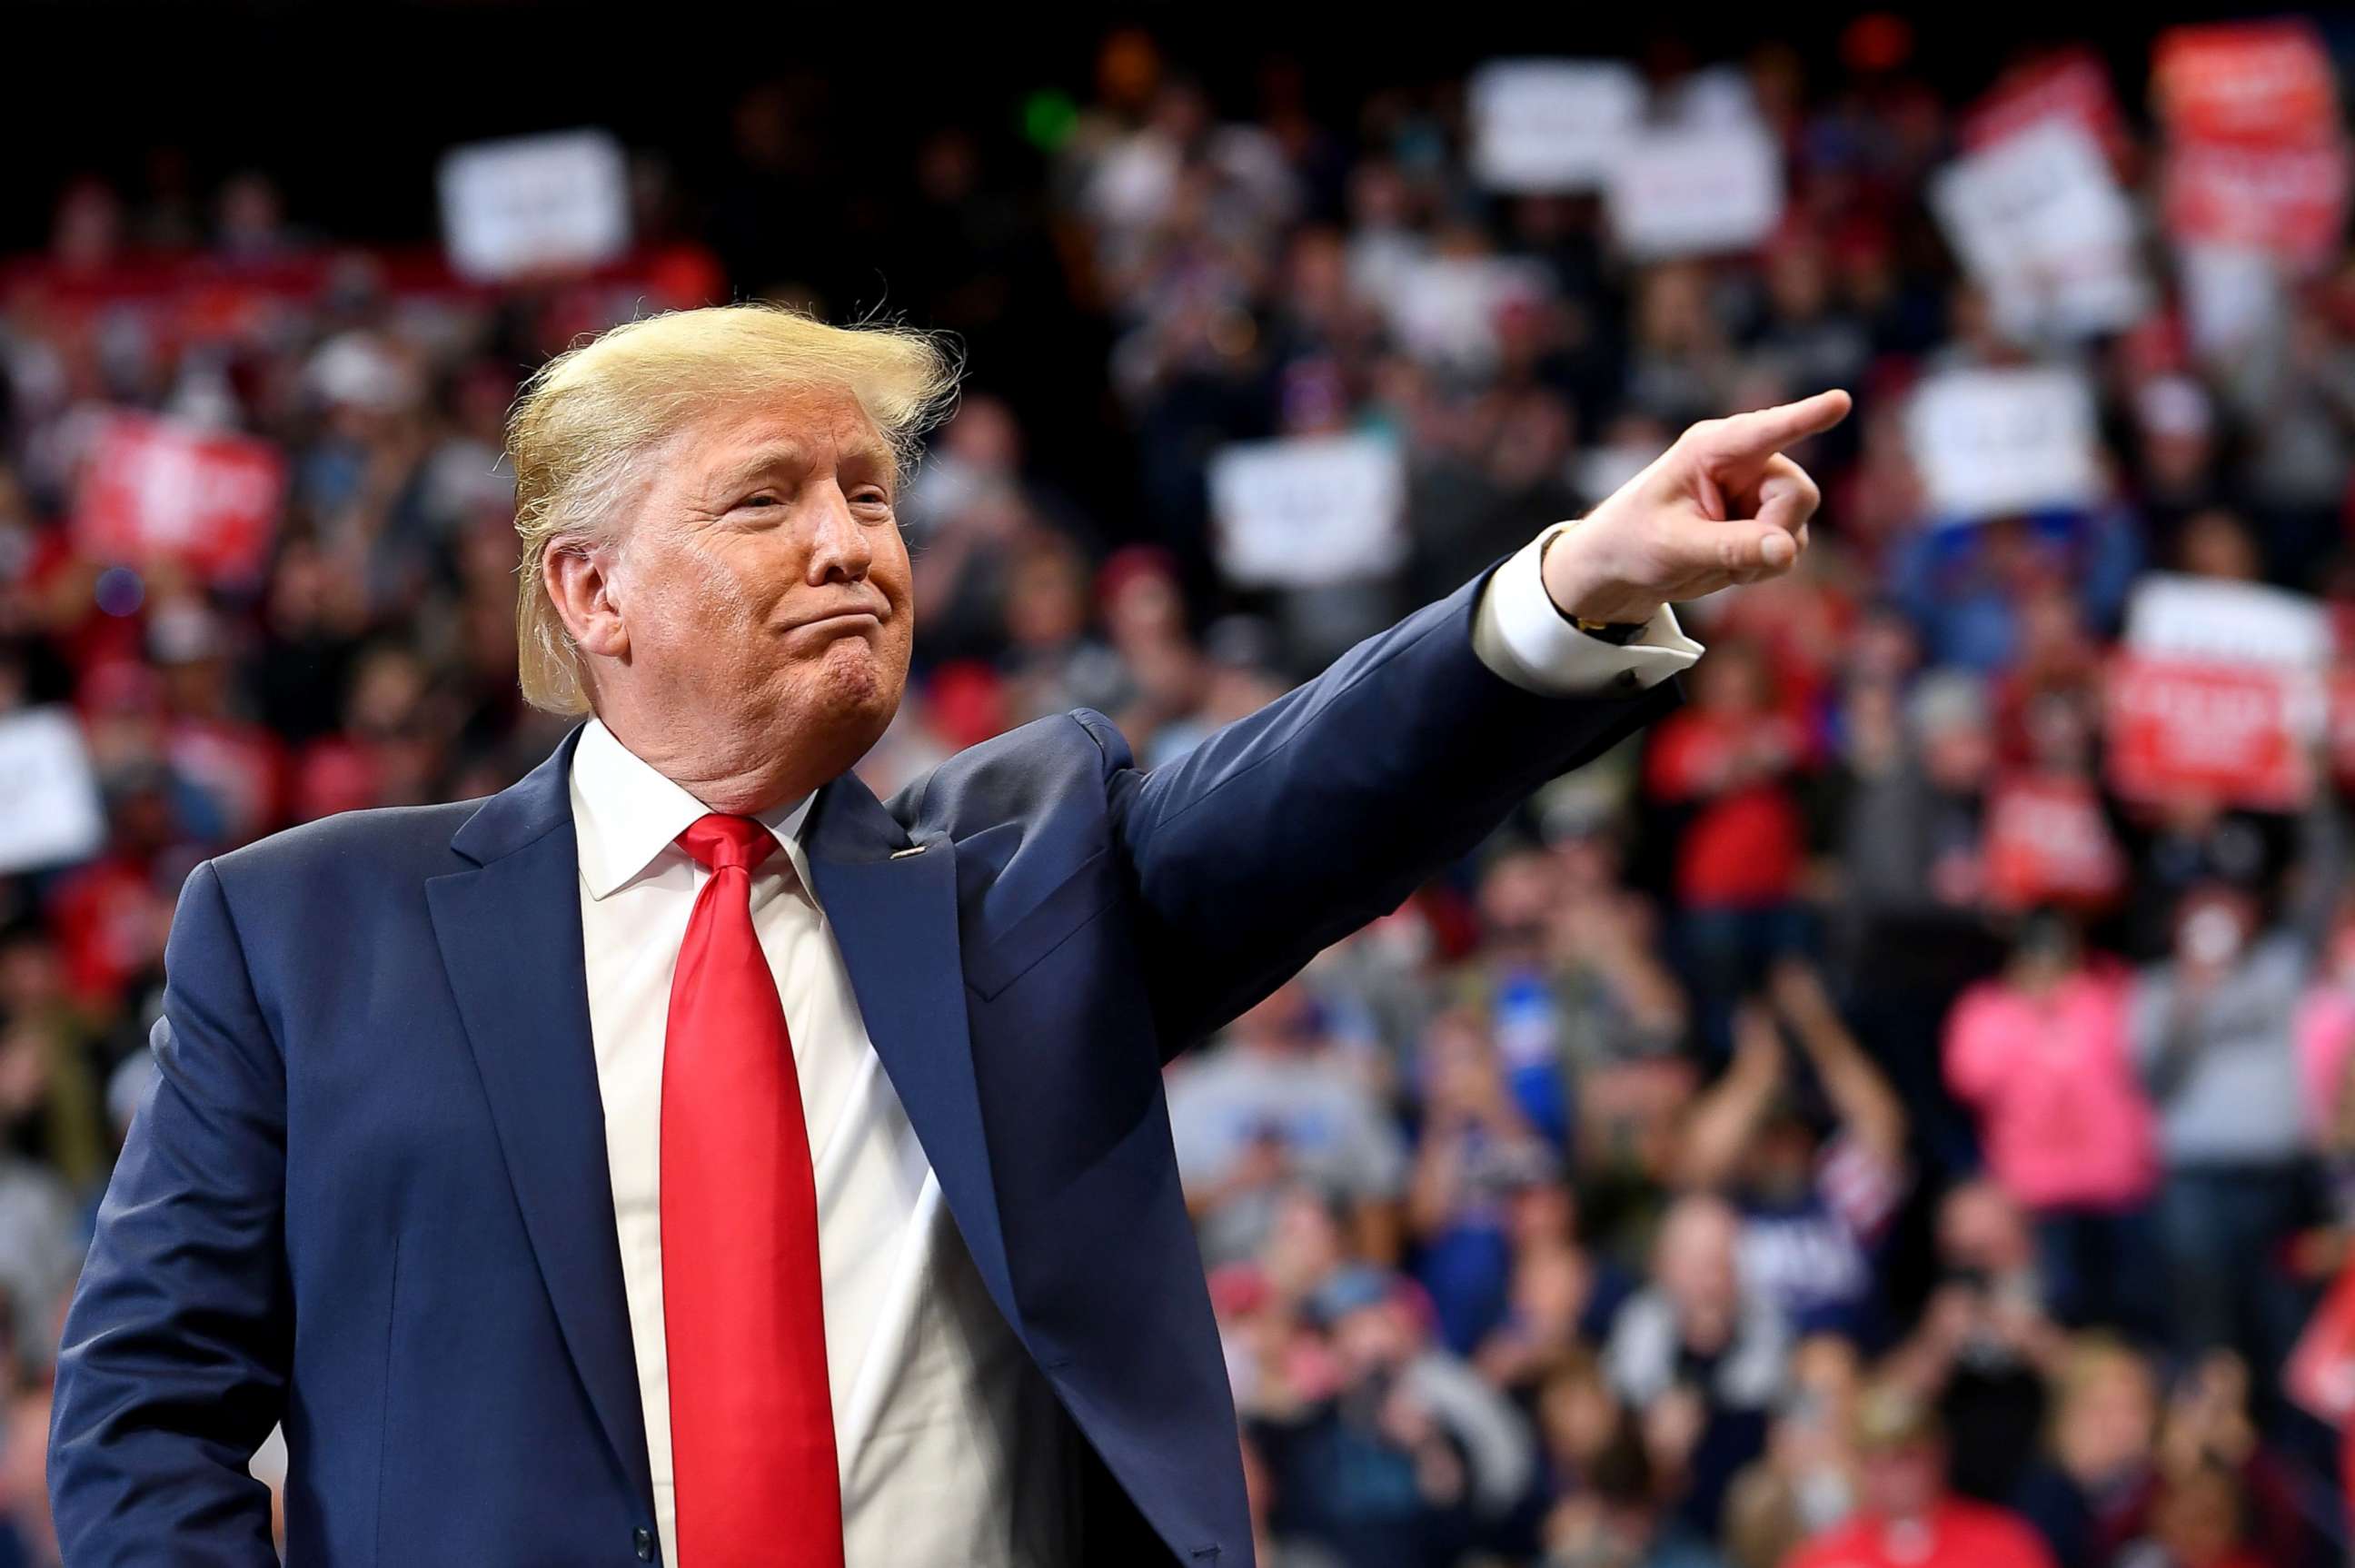 PHOTO: President Donald Trump points during a rally at Rupp Arena in Lexington, Kentucky, Nov. 4, 2019.